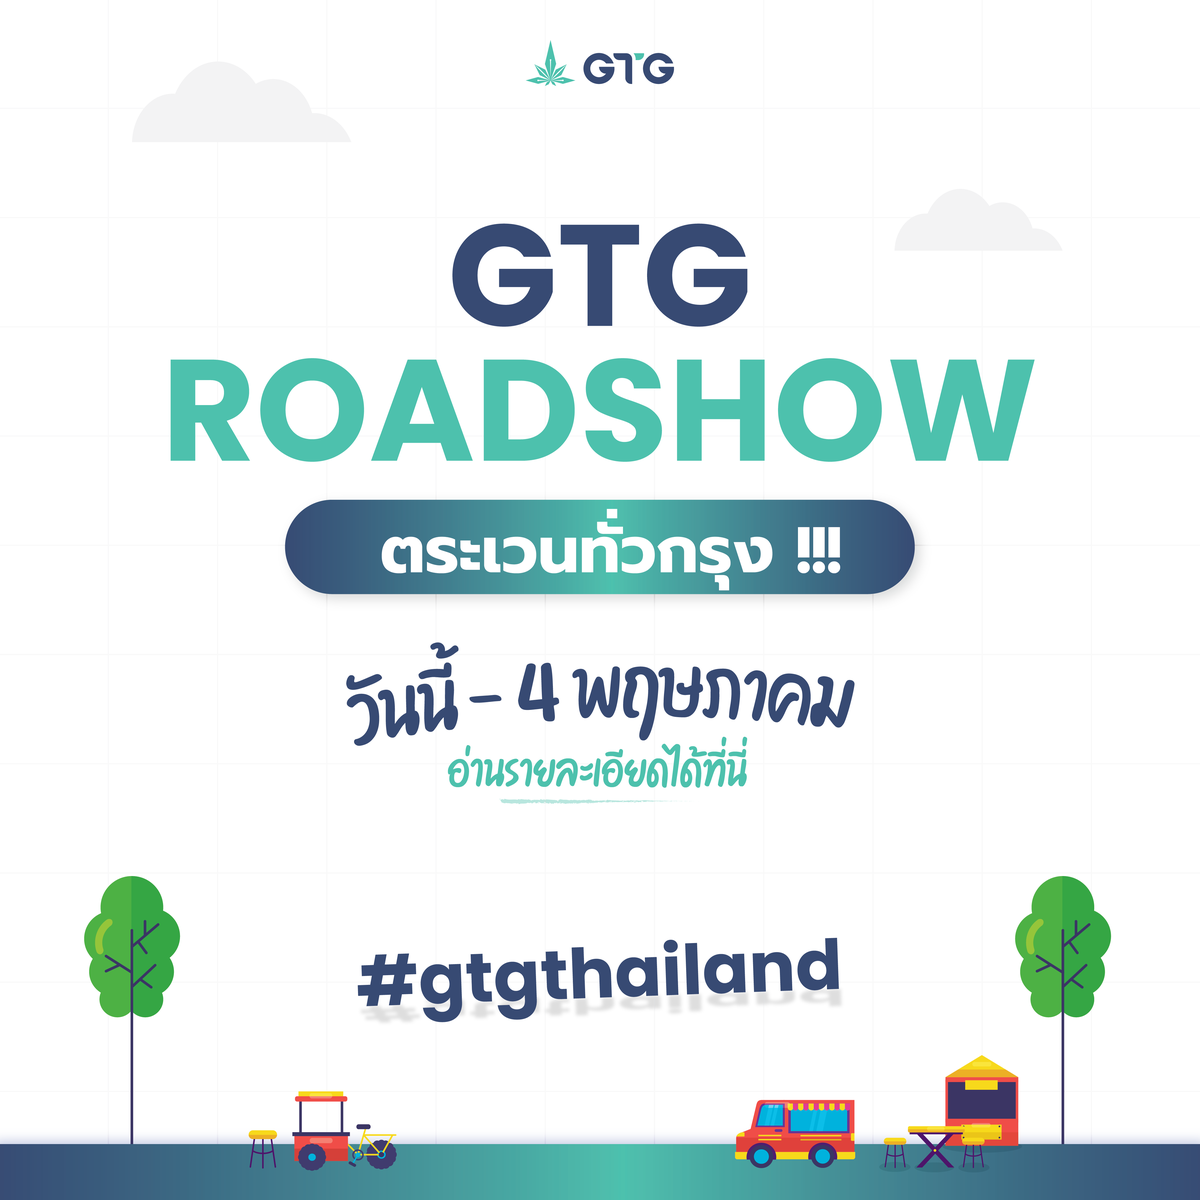 GTG บุกตลาดทั่วกทม. จัด Roadshow มอบสินค้ากัญชงระดับสากลแก่ผู้ที่สนใจแล้ววันนี้!!